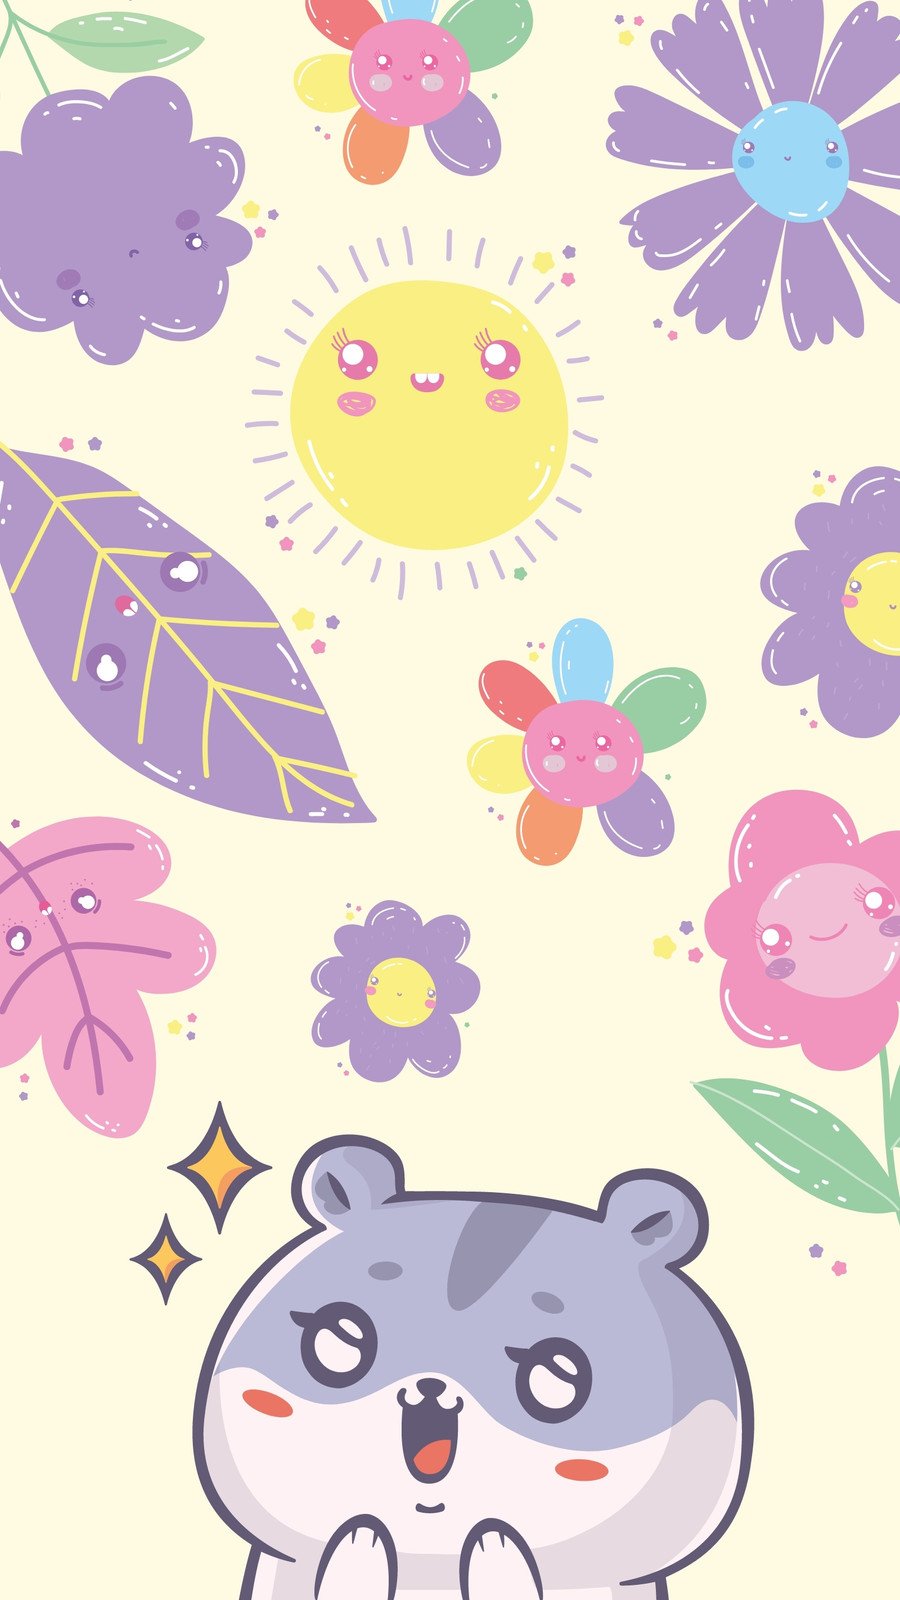 Free and customizable beautiful cute wallpaper templates